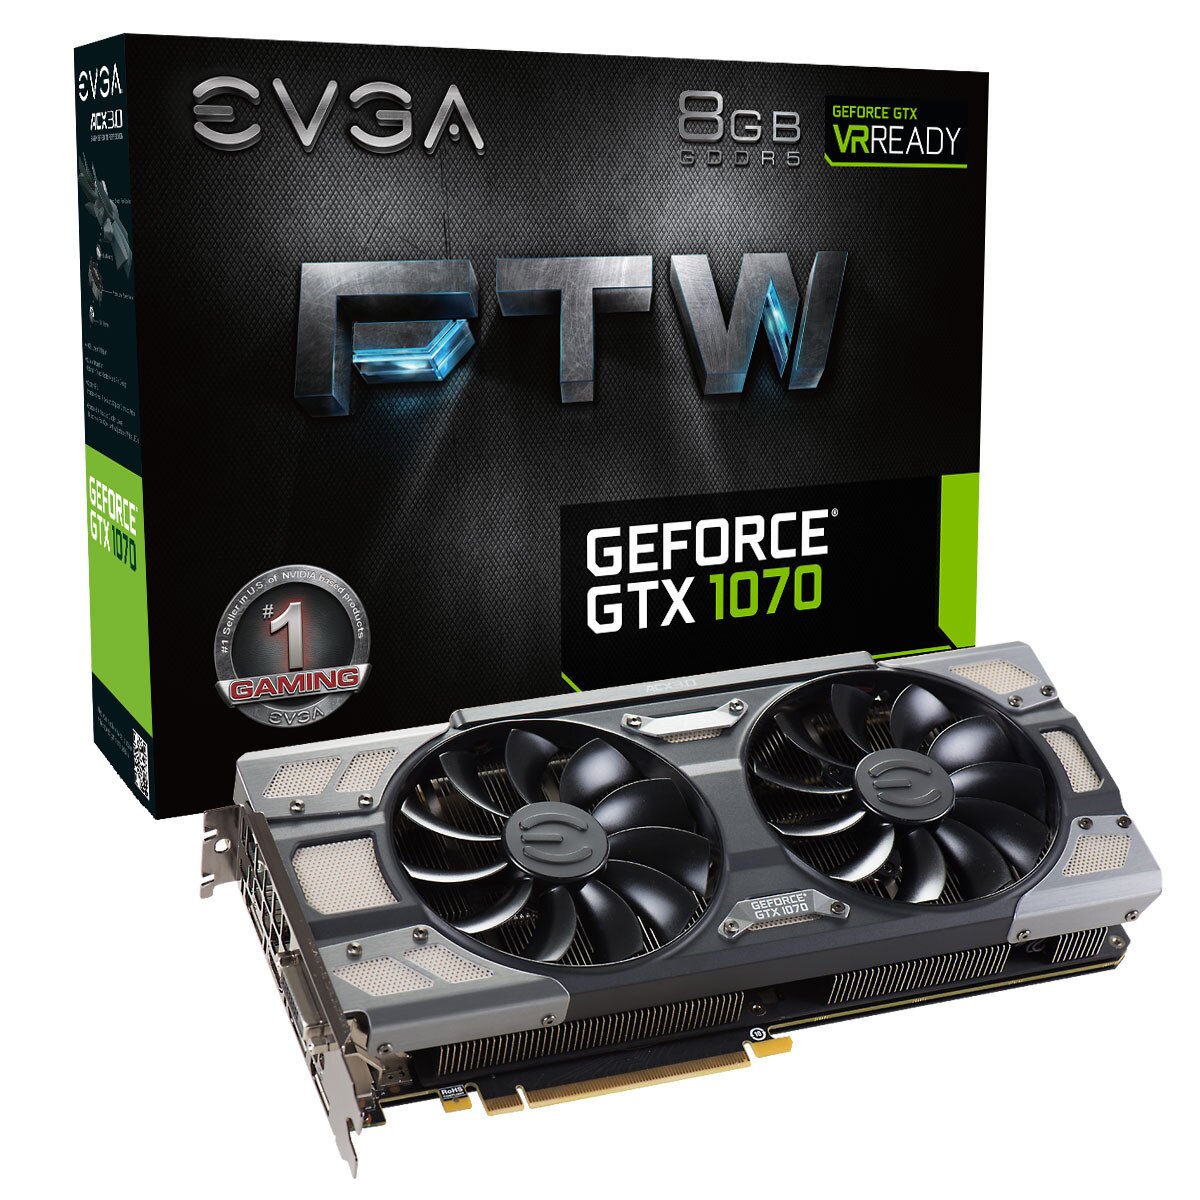 Buy EVGA GeForce GTX 1070 FTW Gaming, 8GB GDDR5, ACX 3.0  RGB LED Graphics  Card online in Pakistan - Tejar.pk